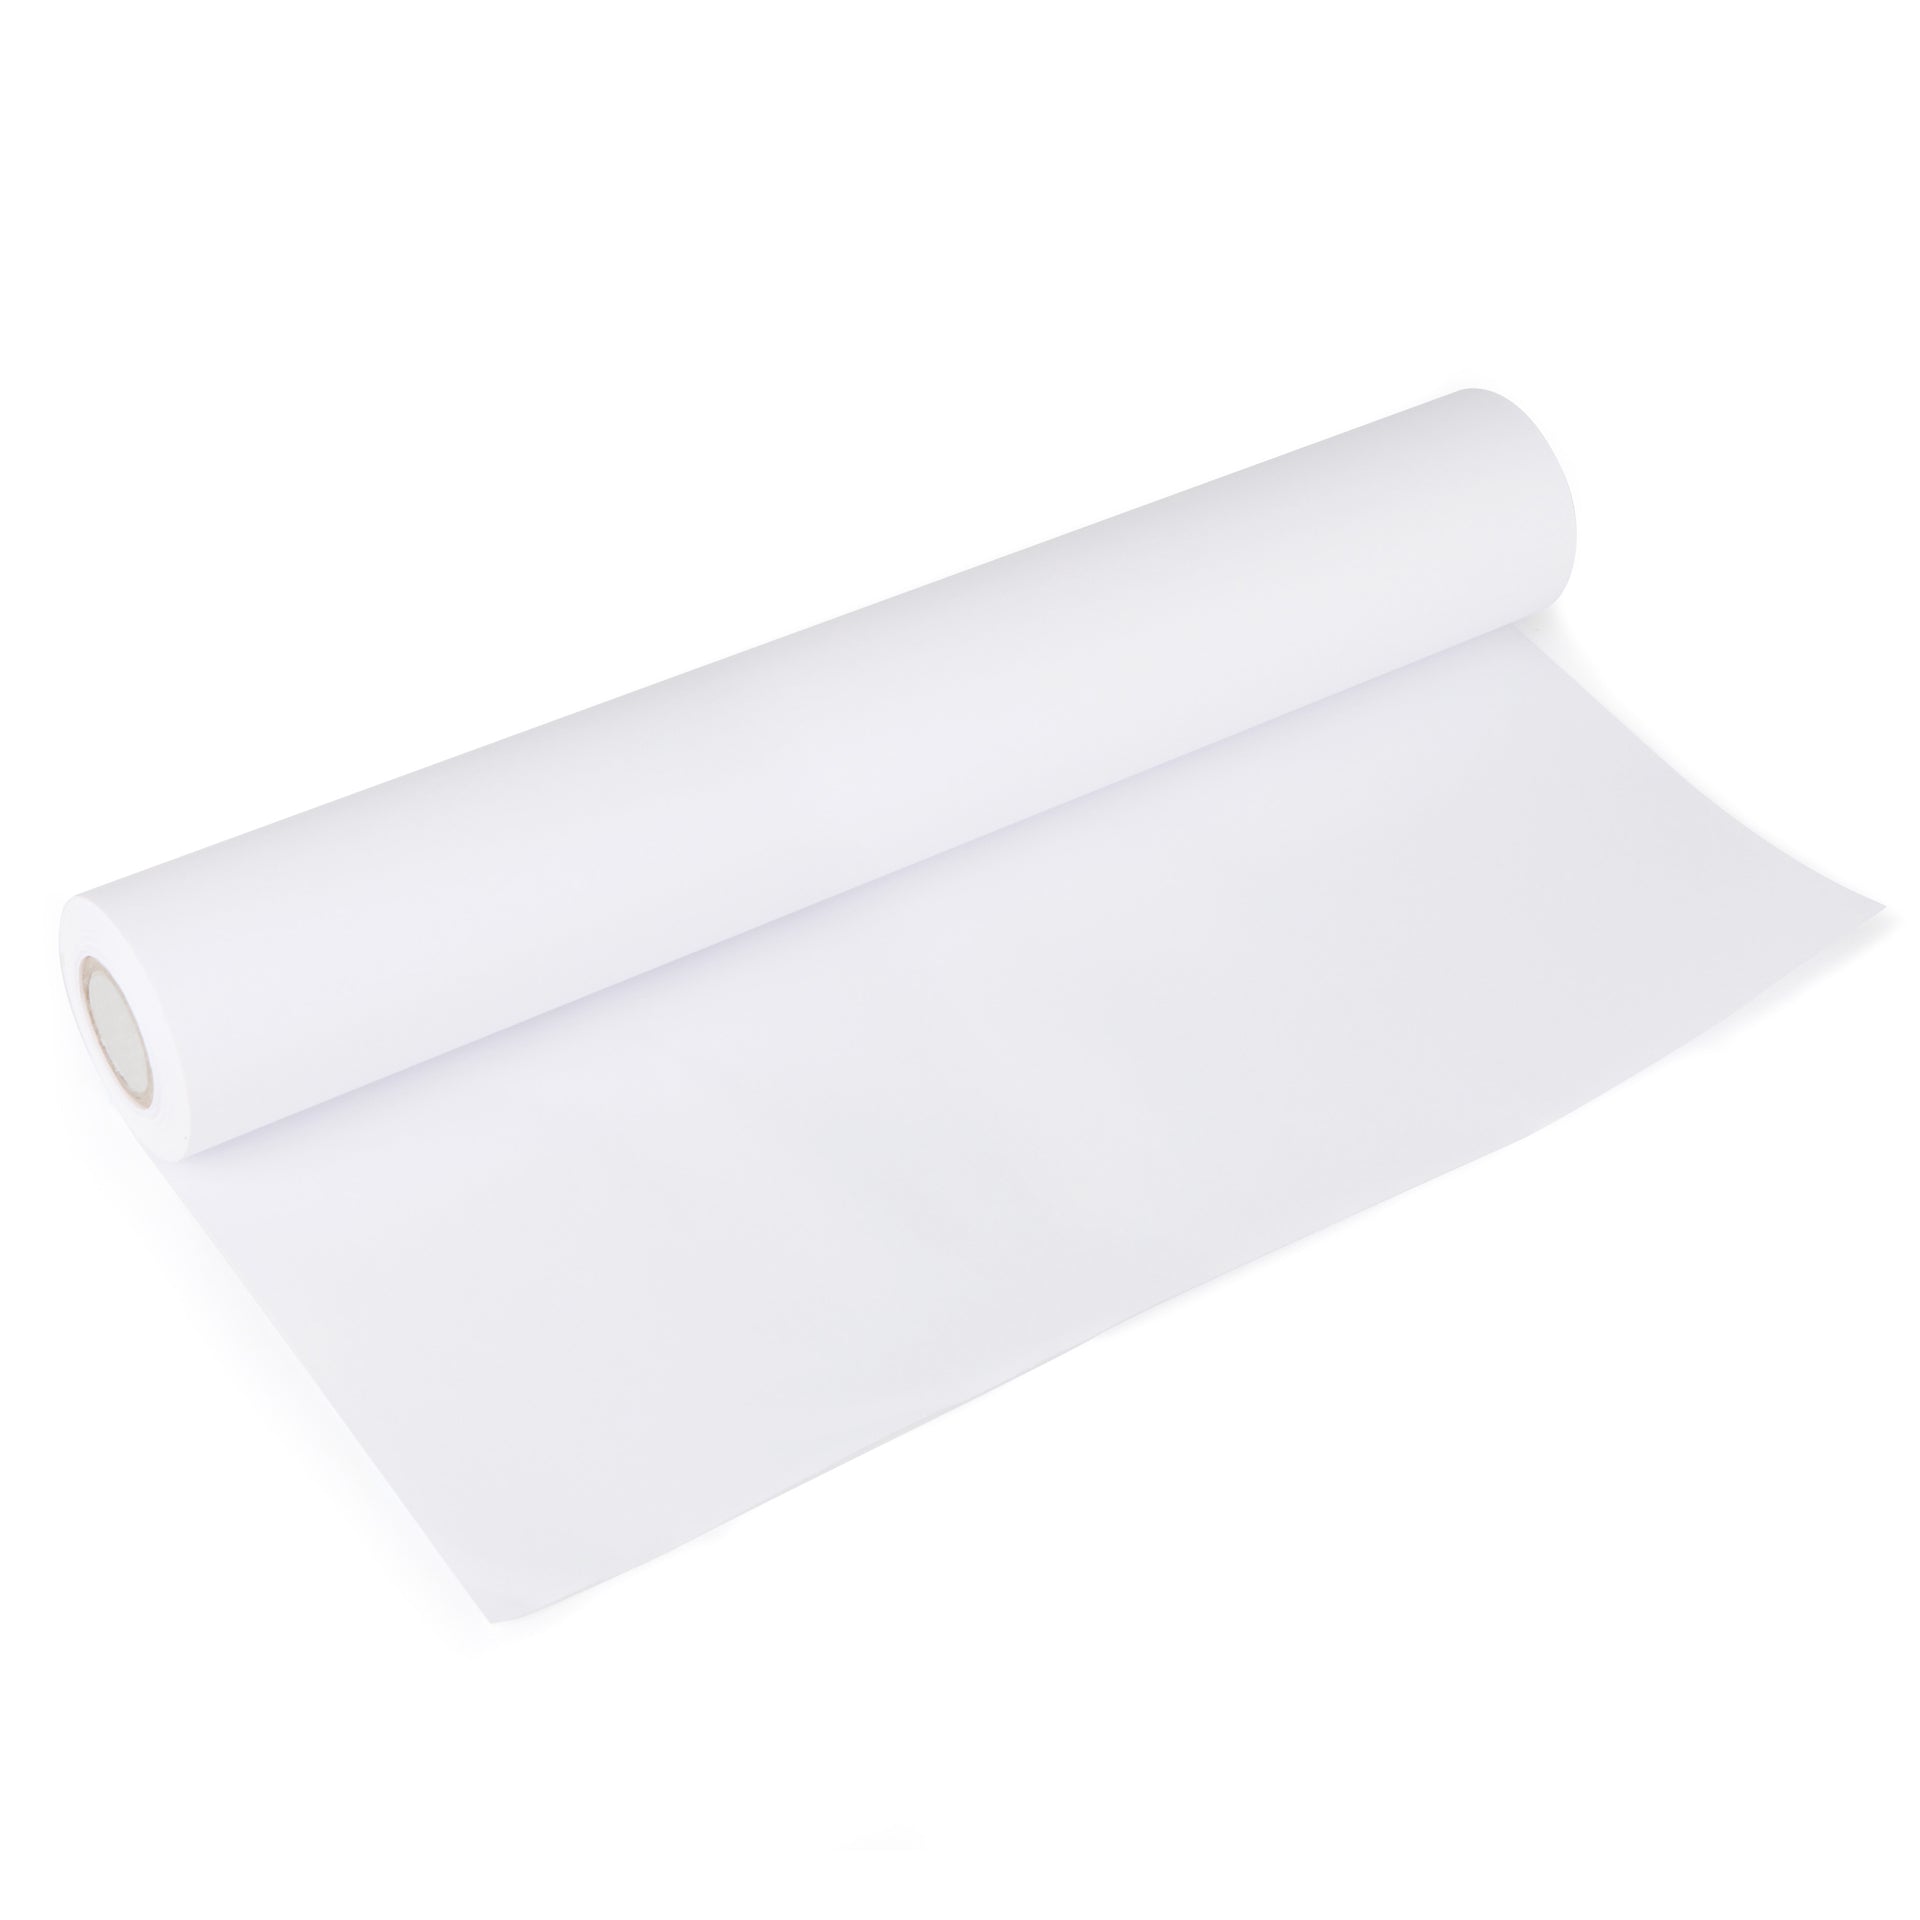 Hape - Art Paper Roll